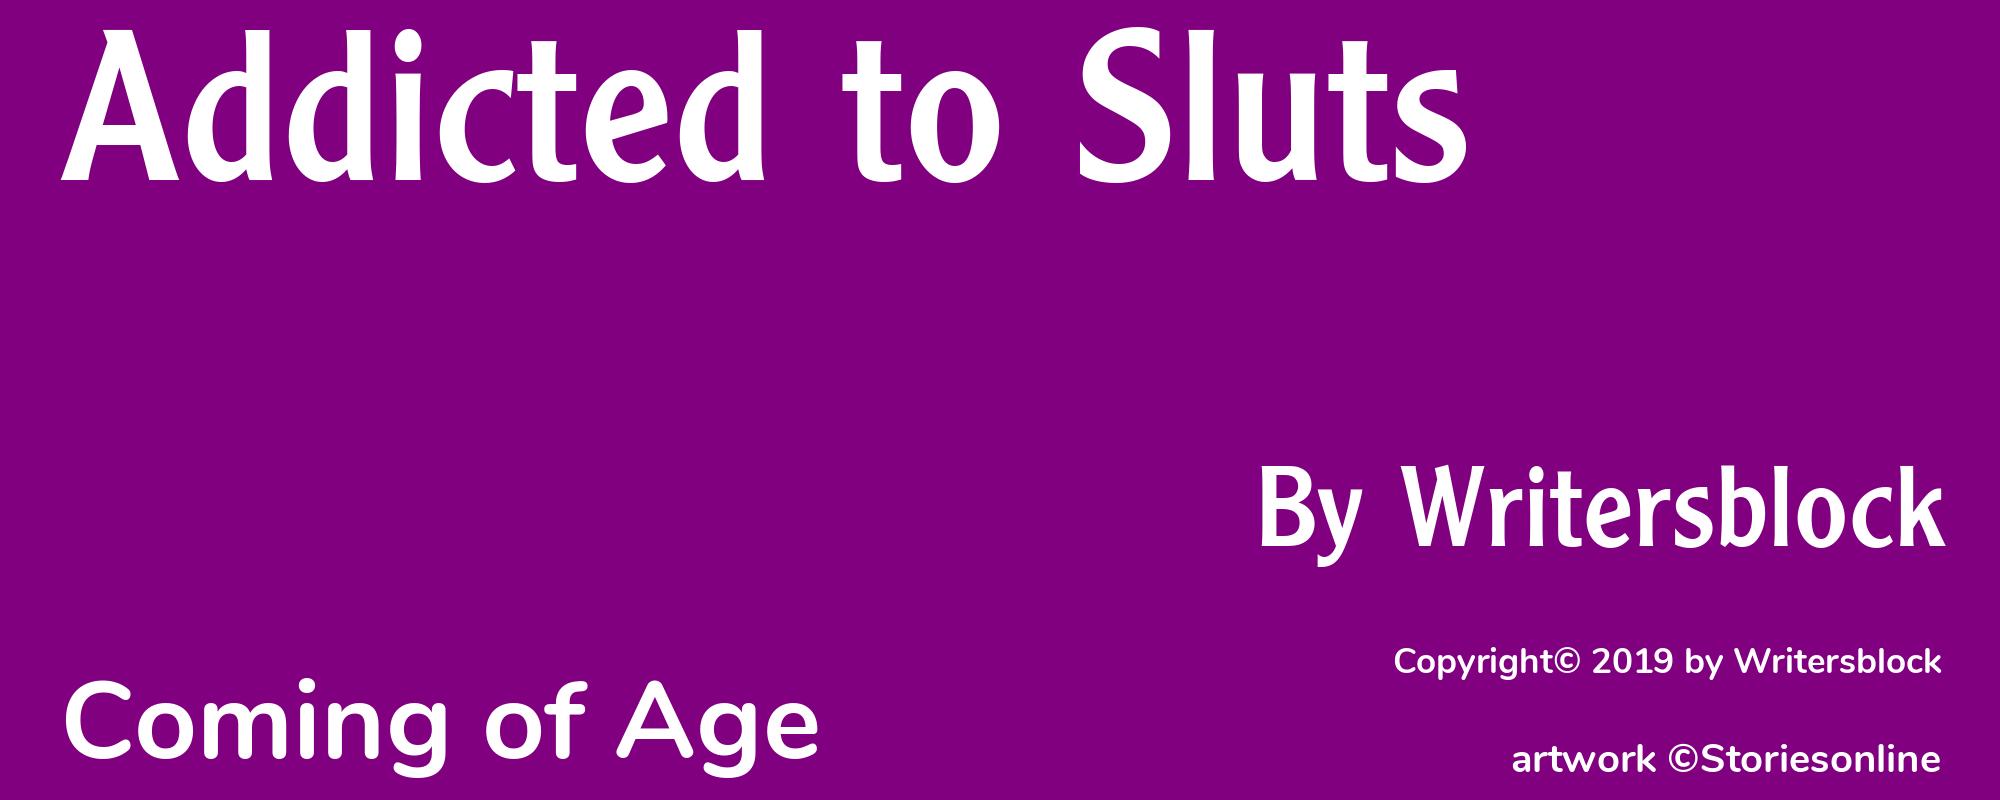 Addicted to Sluts - Cover